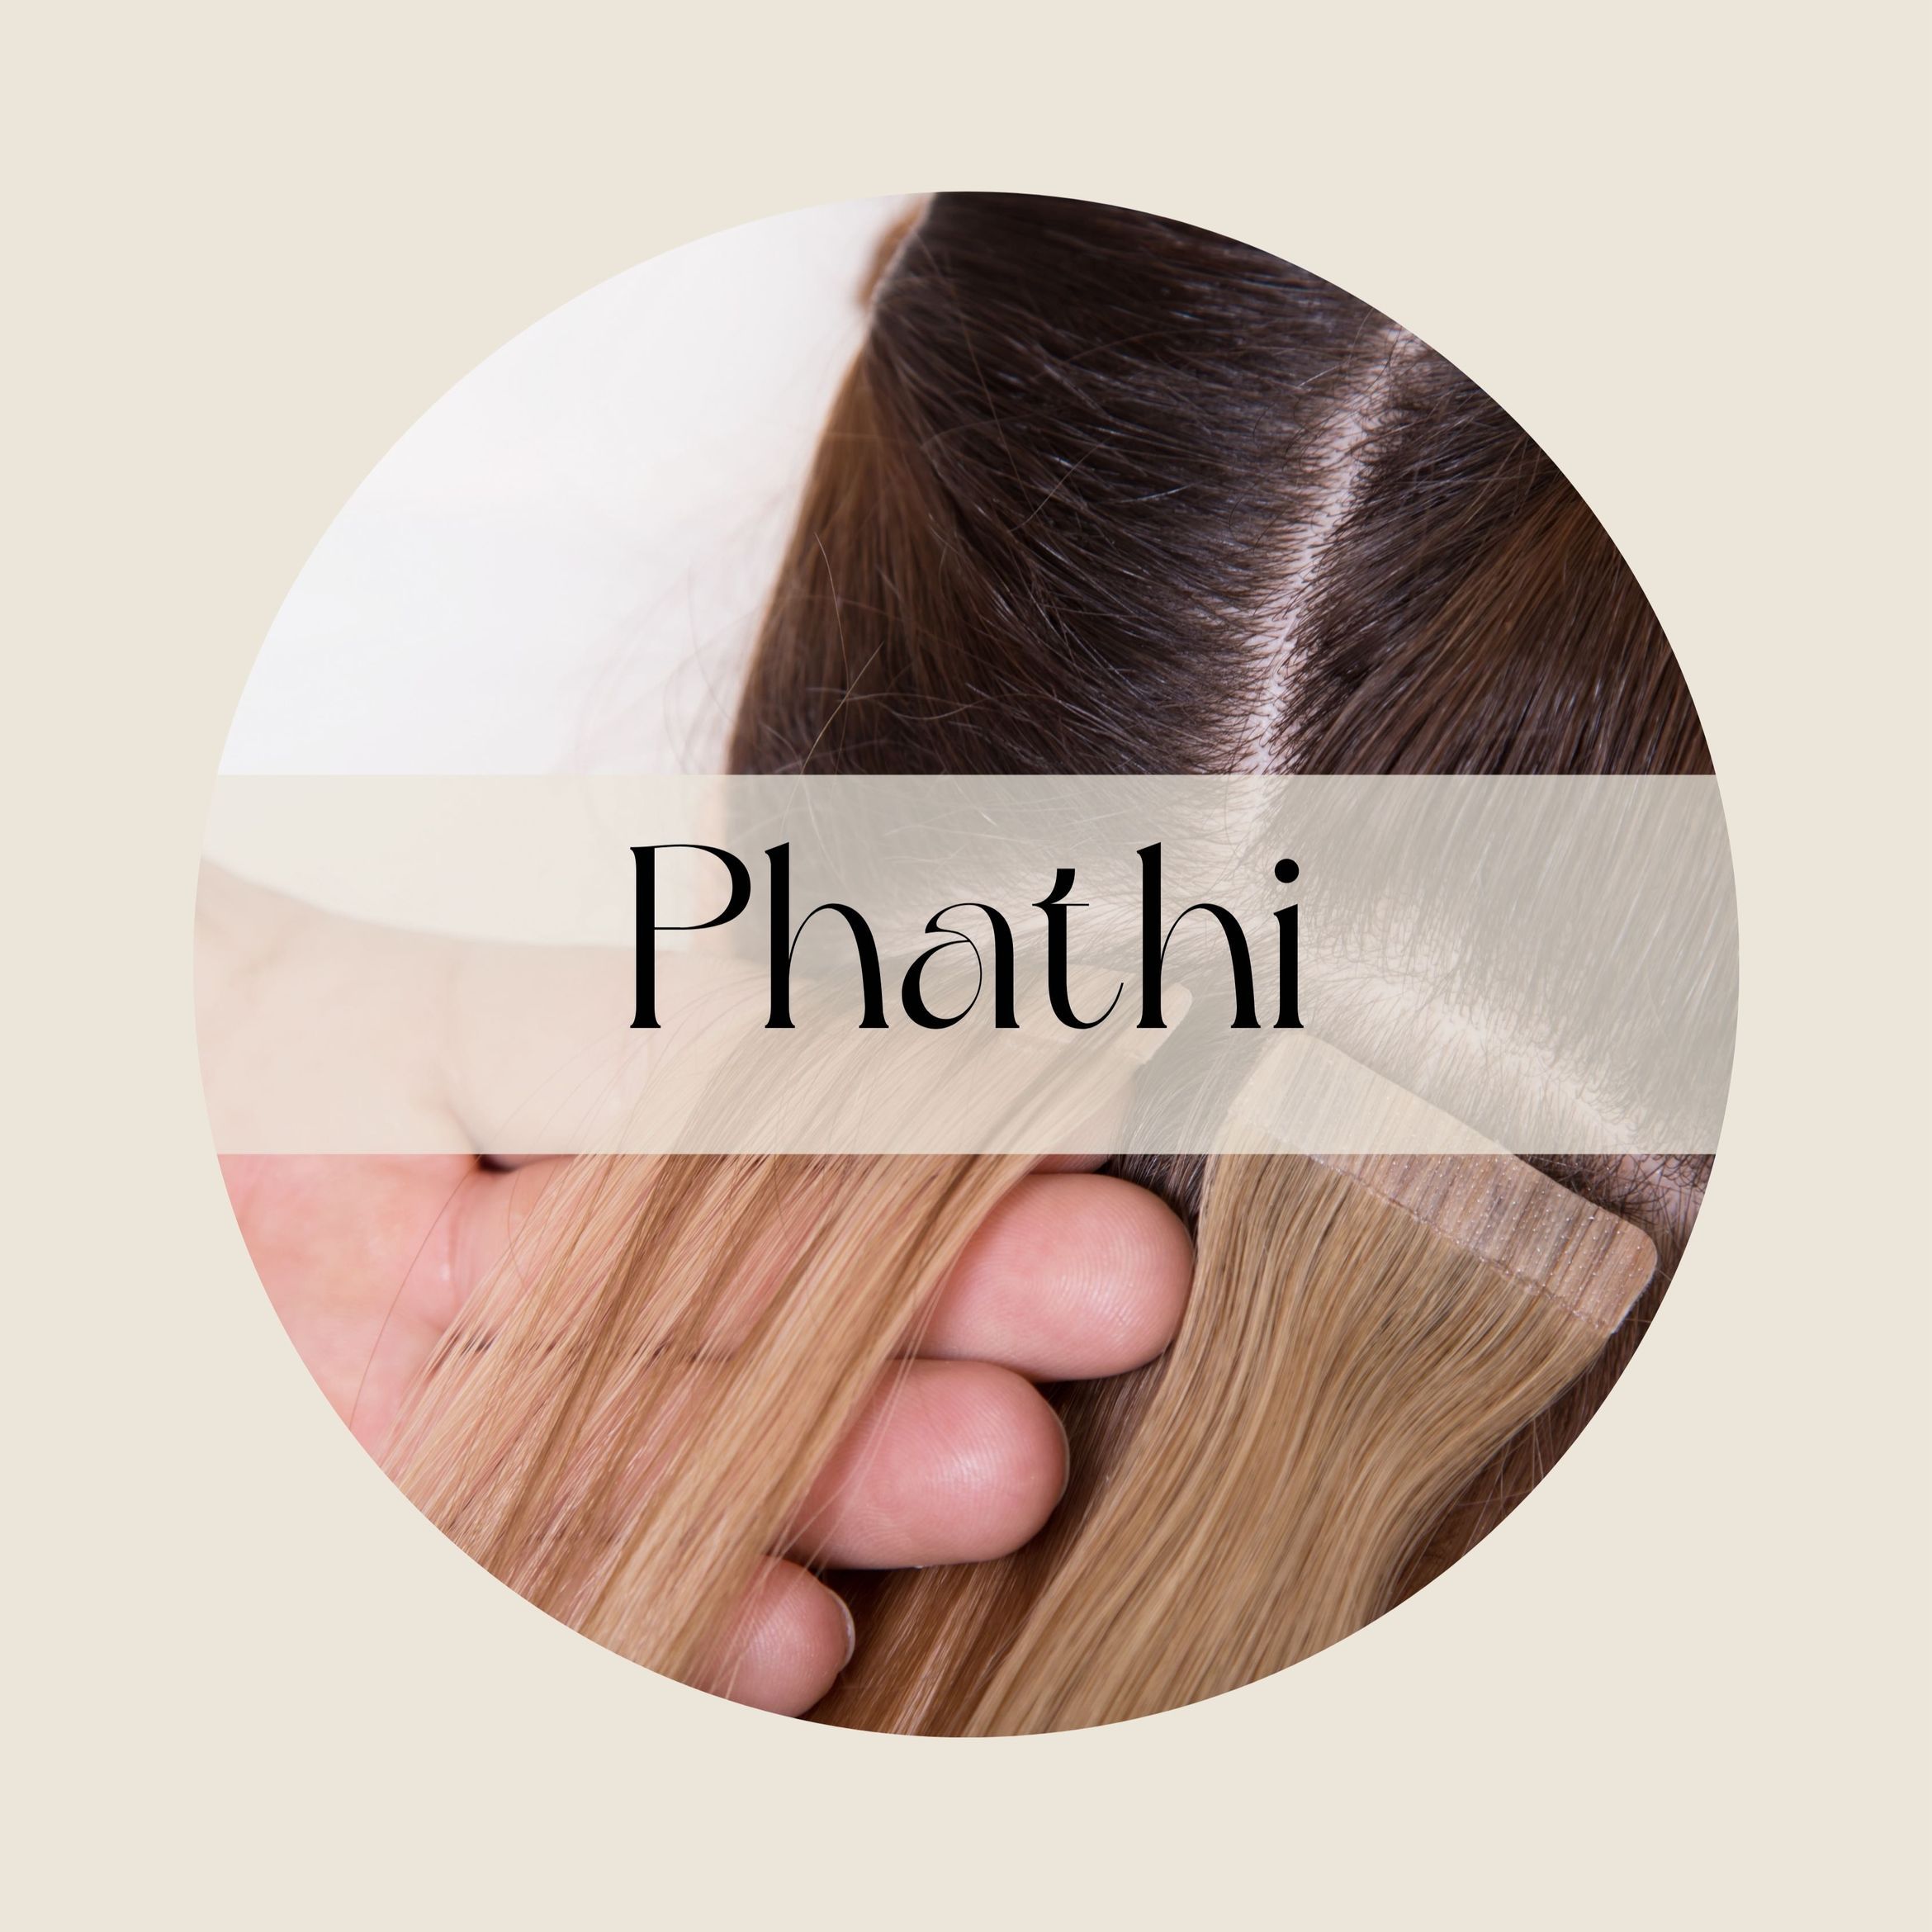 Phathi - Wyatt Hairdressing and Barbering + Beauty